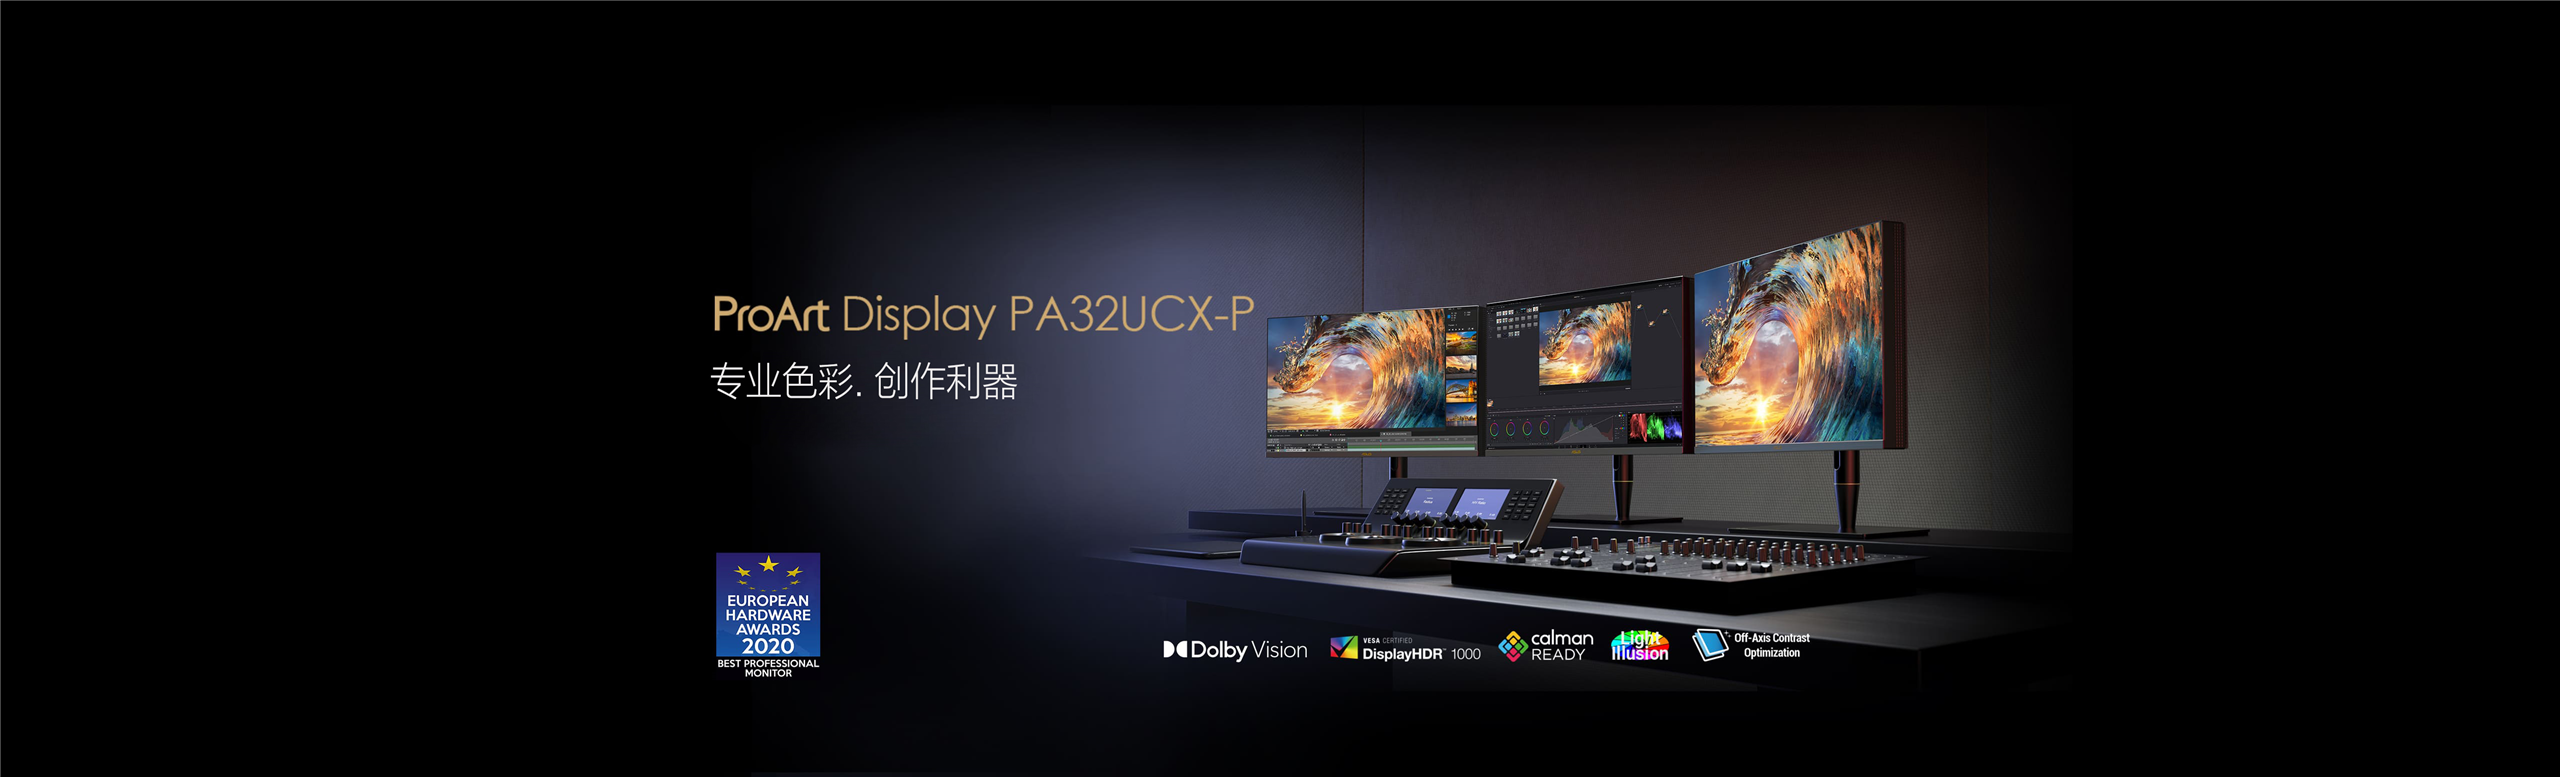 ProArt-Display-PA32UCX-P